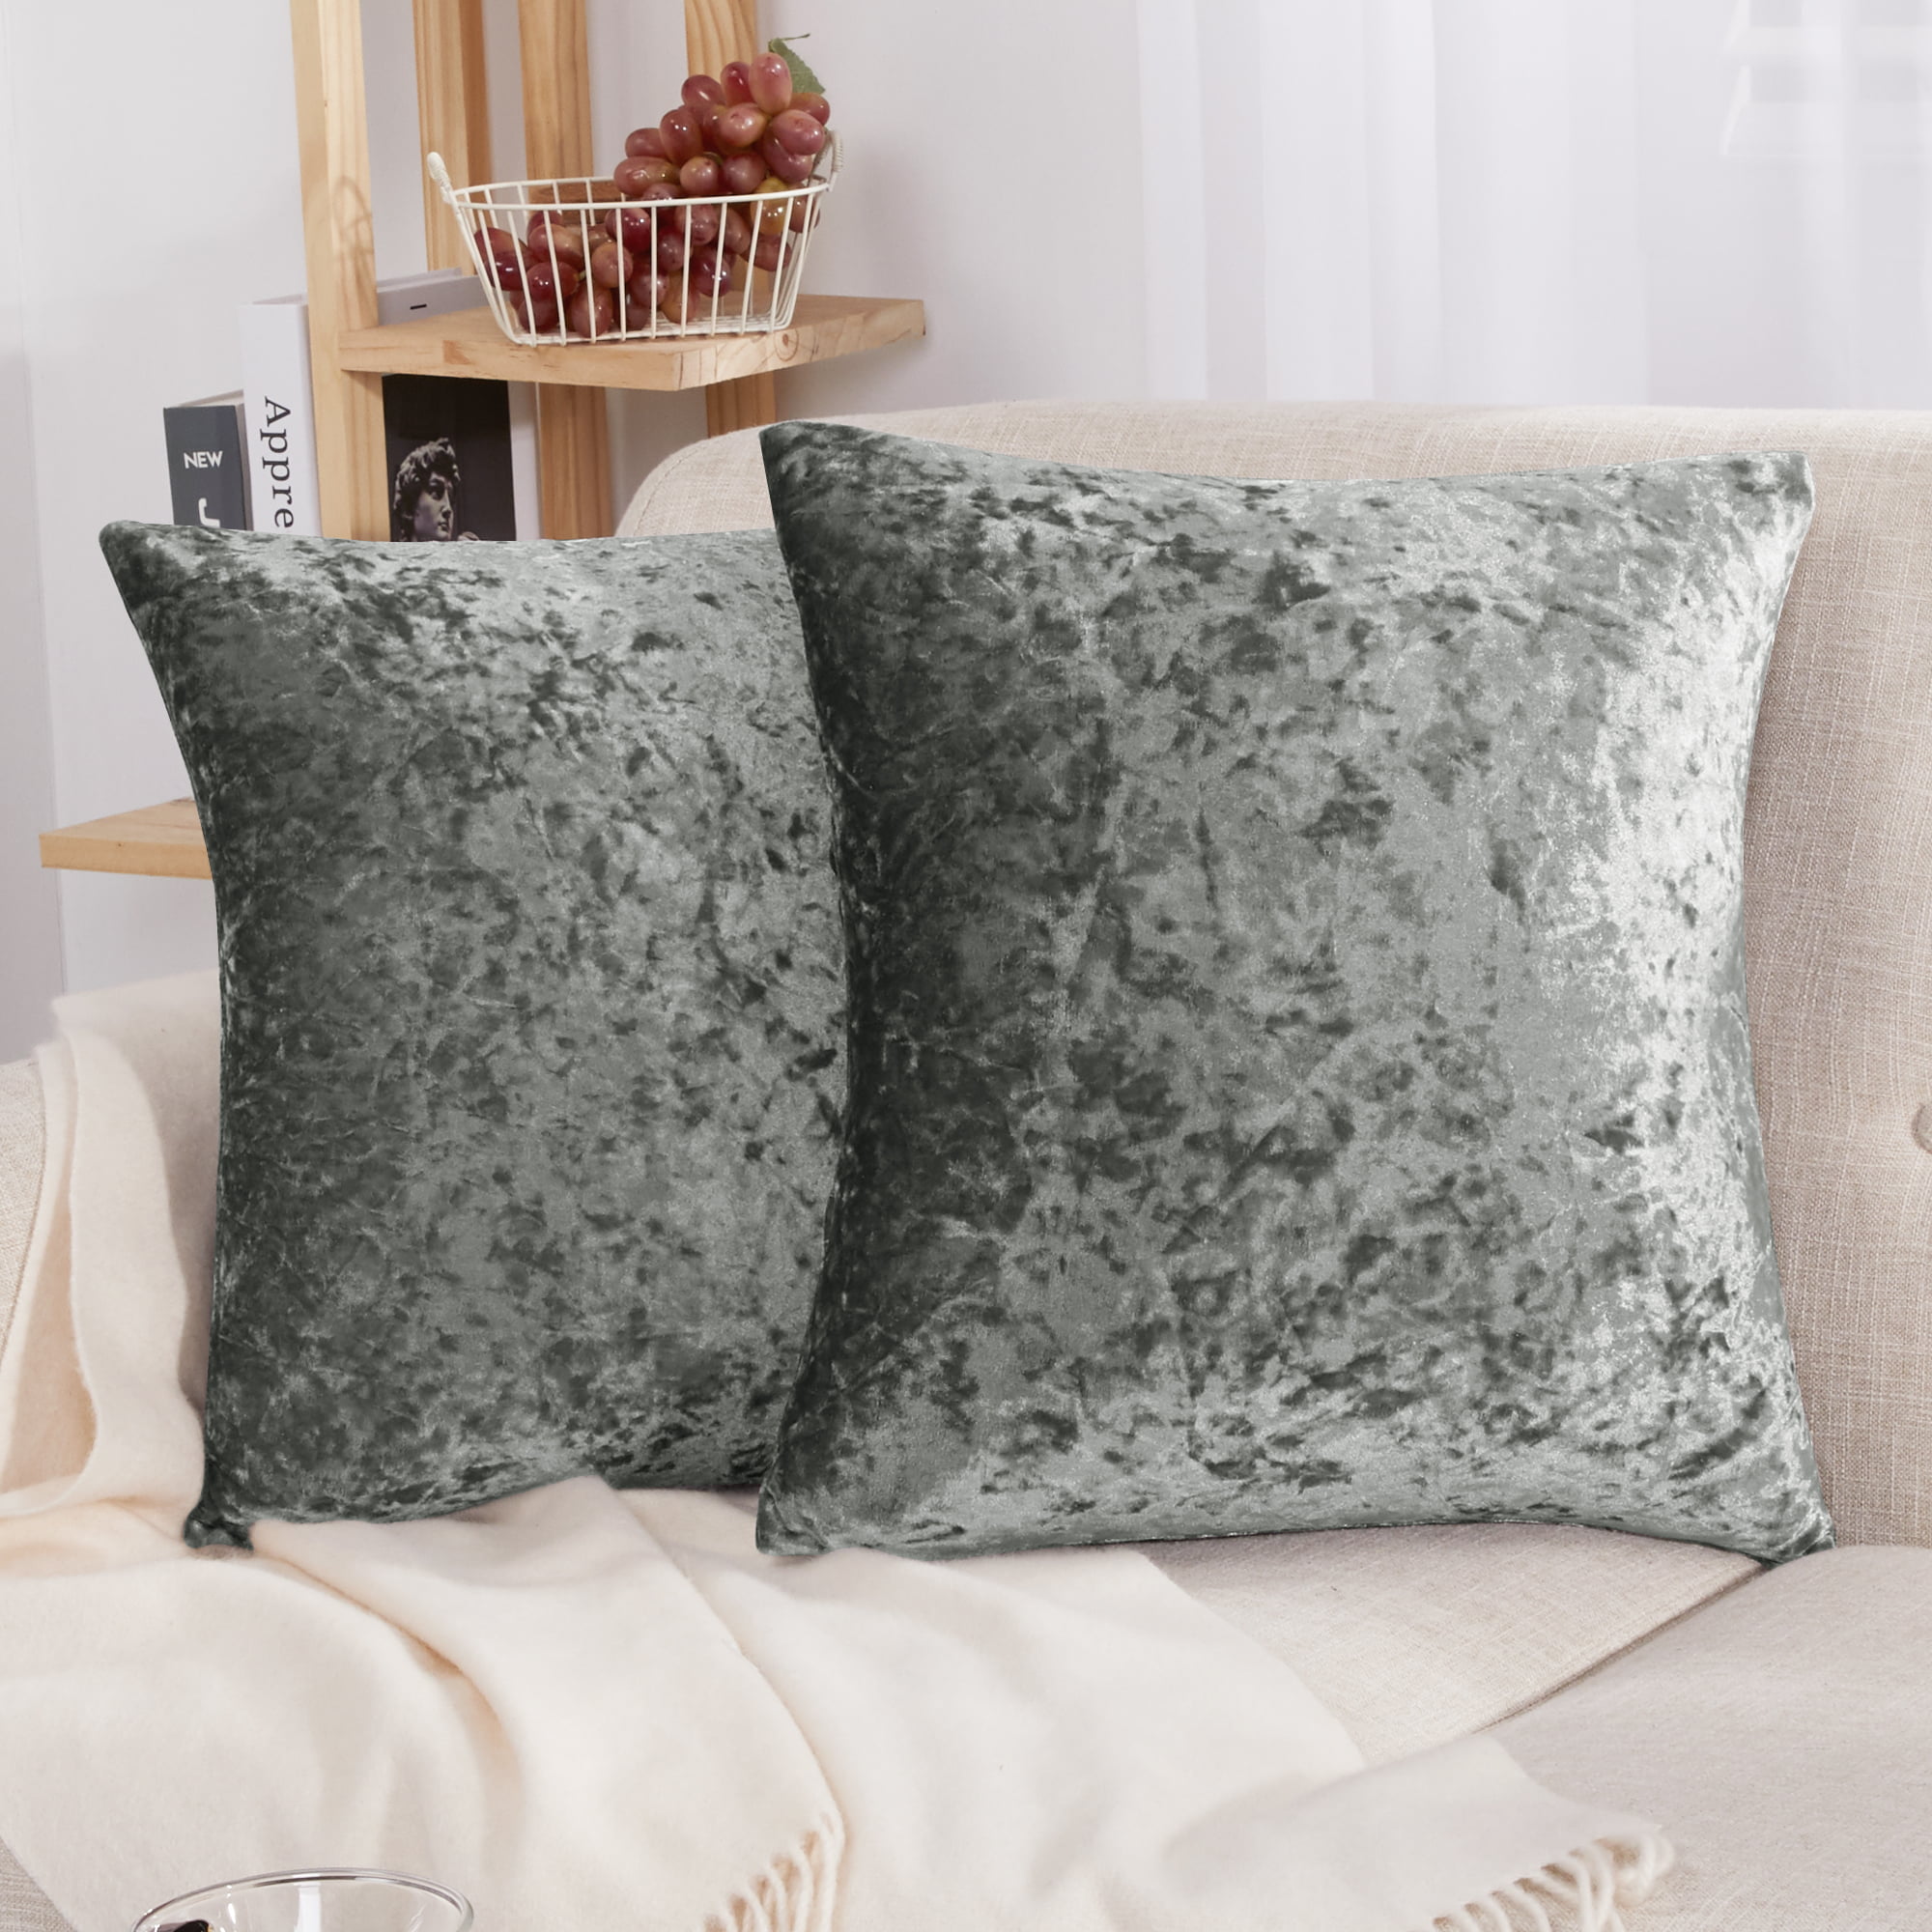 Handmade Crushed Velvet Cushion With Removeable Insert Sofa Bed Decor Zipper 